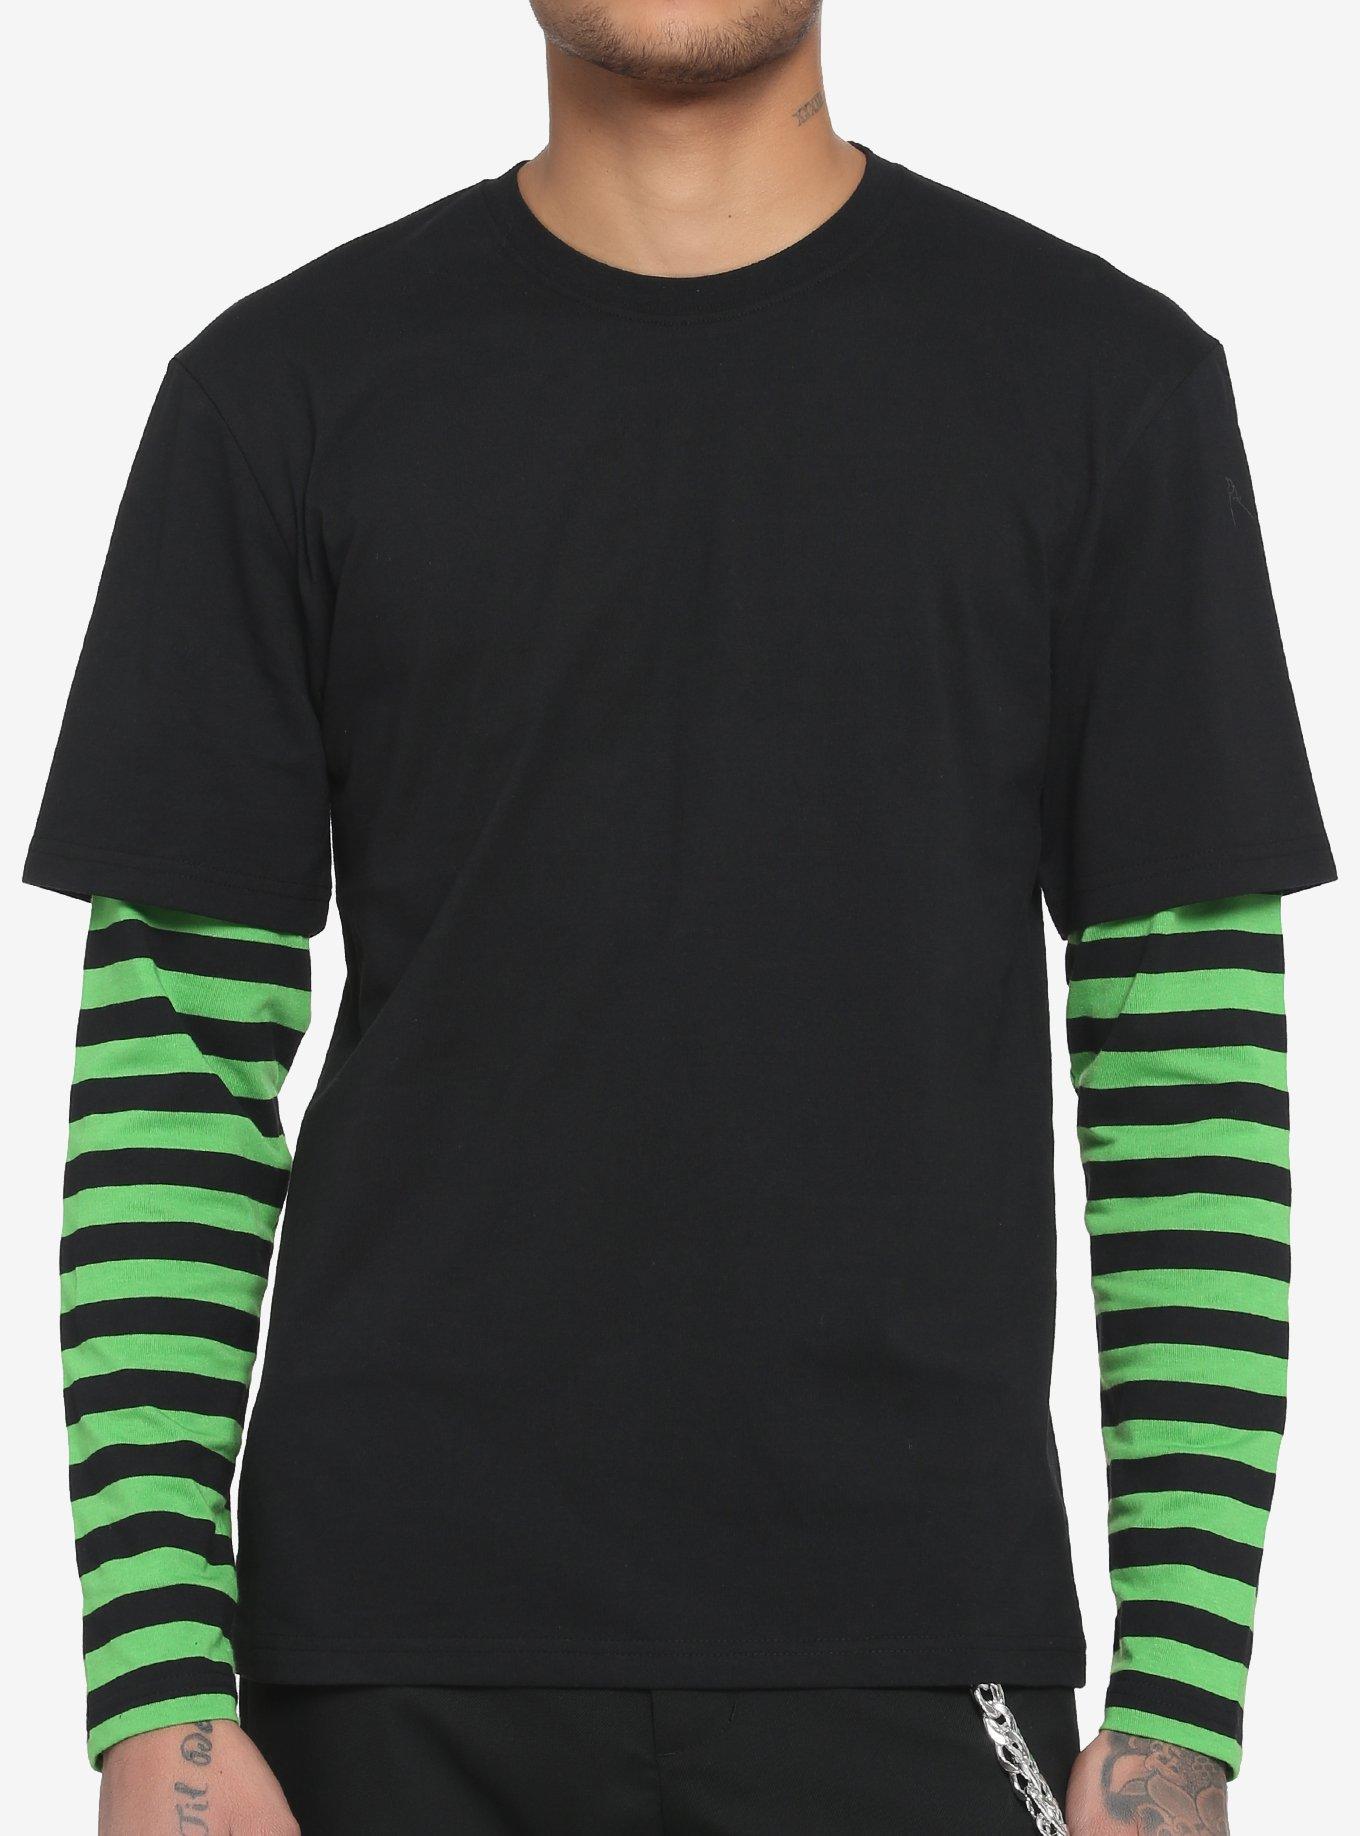 Black & Neon Green Stripe Sleeve Long-Sleeve T-Shirt, BLACK  GREEN, hi-res